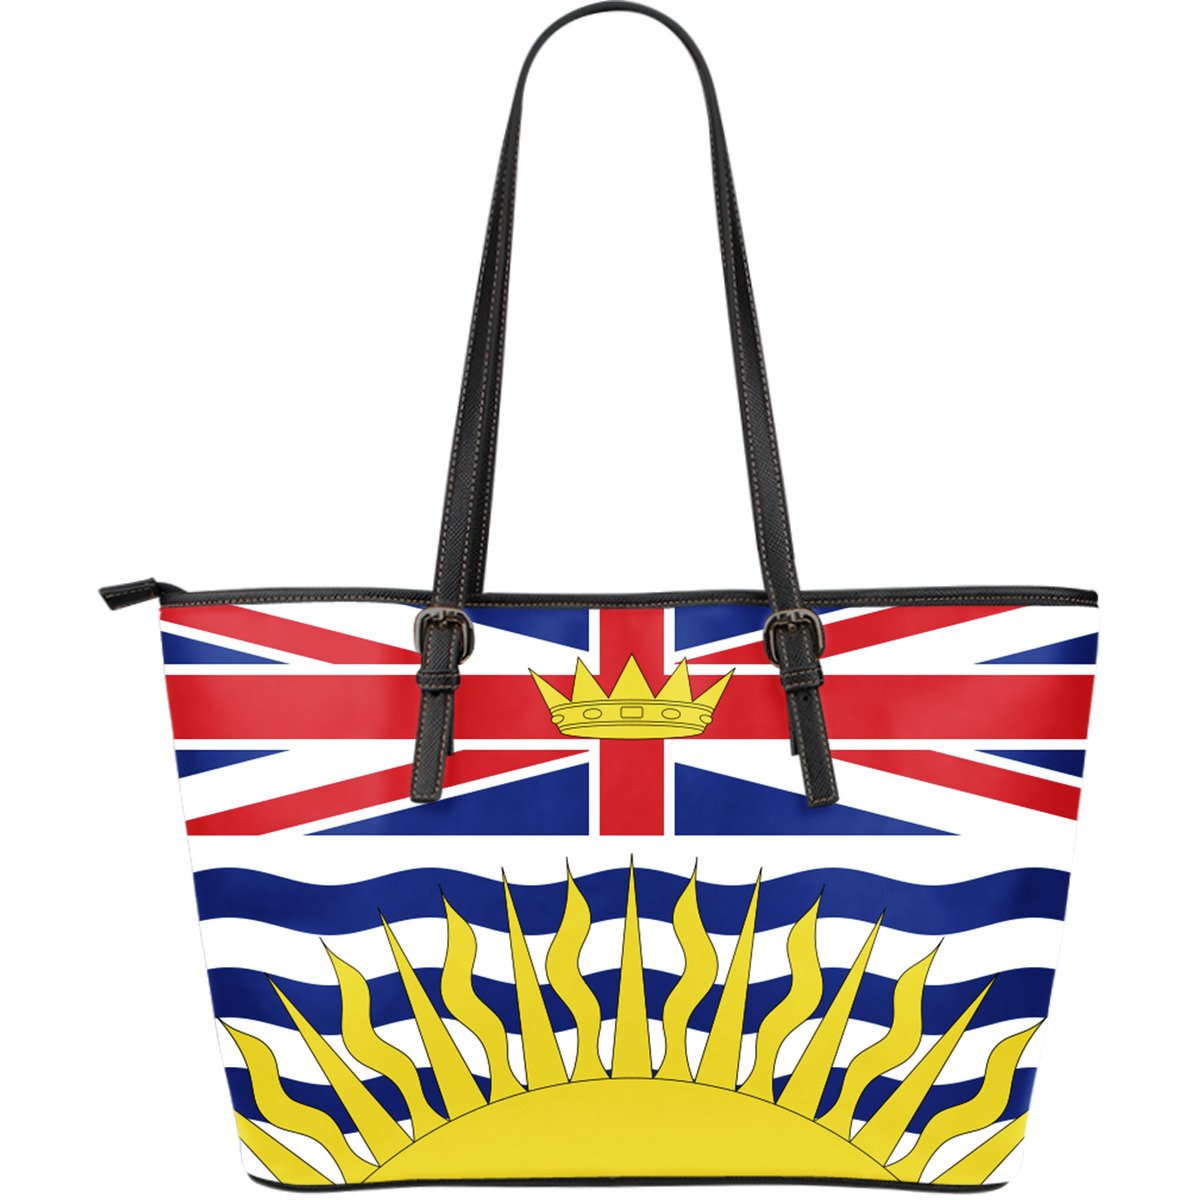 canada-british-columbia-large-leather-tote-bag-06